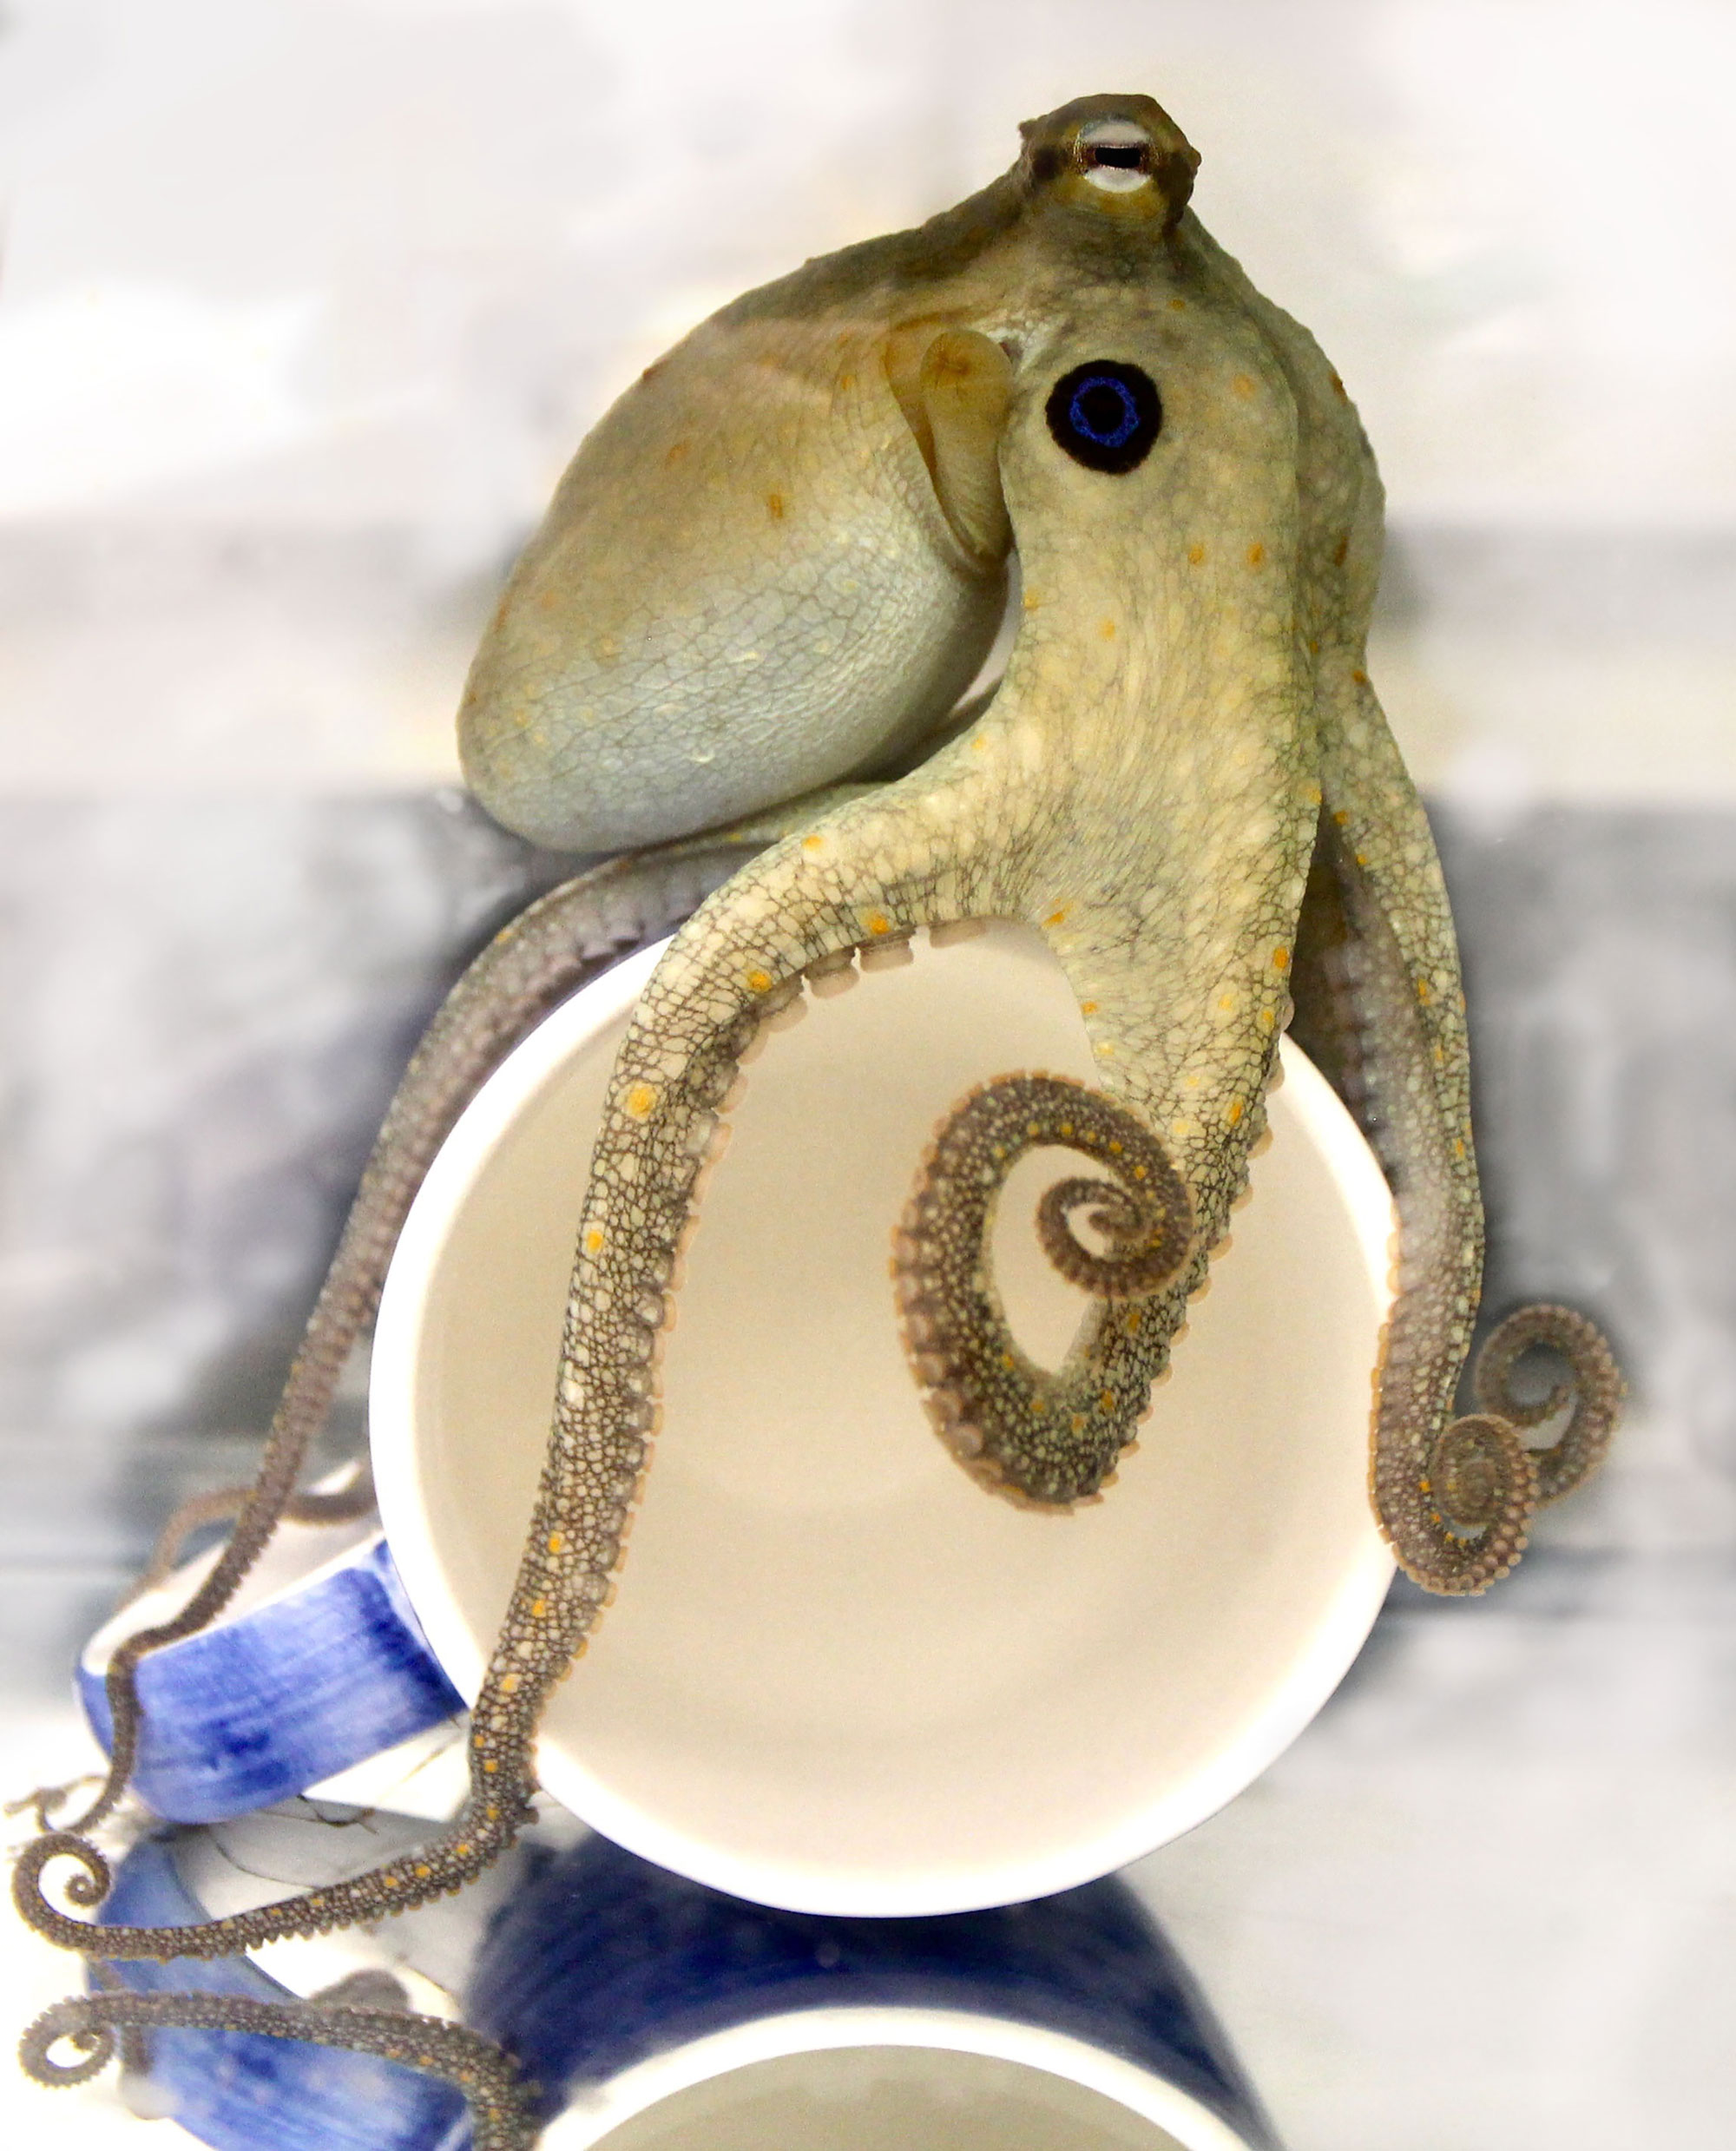 An octopus investigating a coffee cup.  (Image: Lena van Giesen)